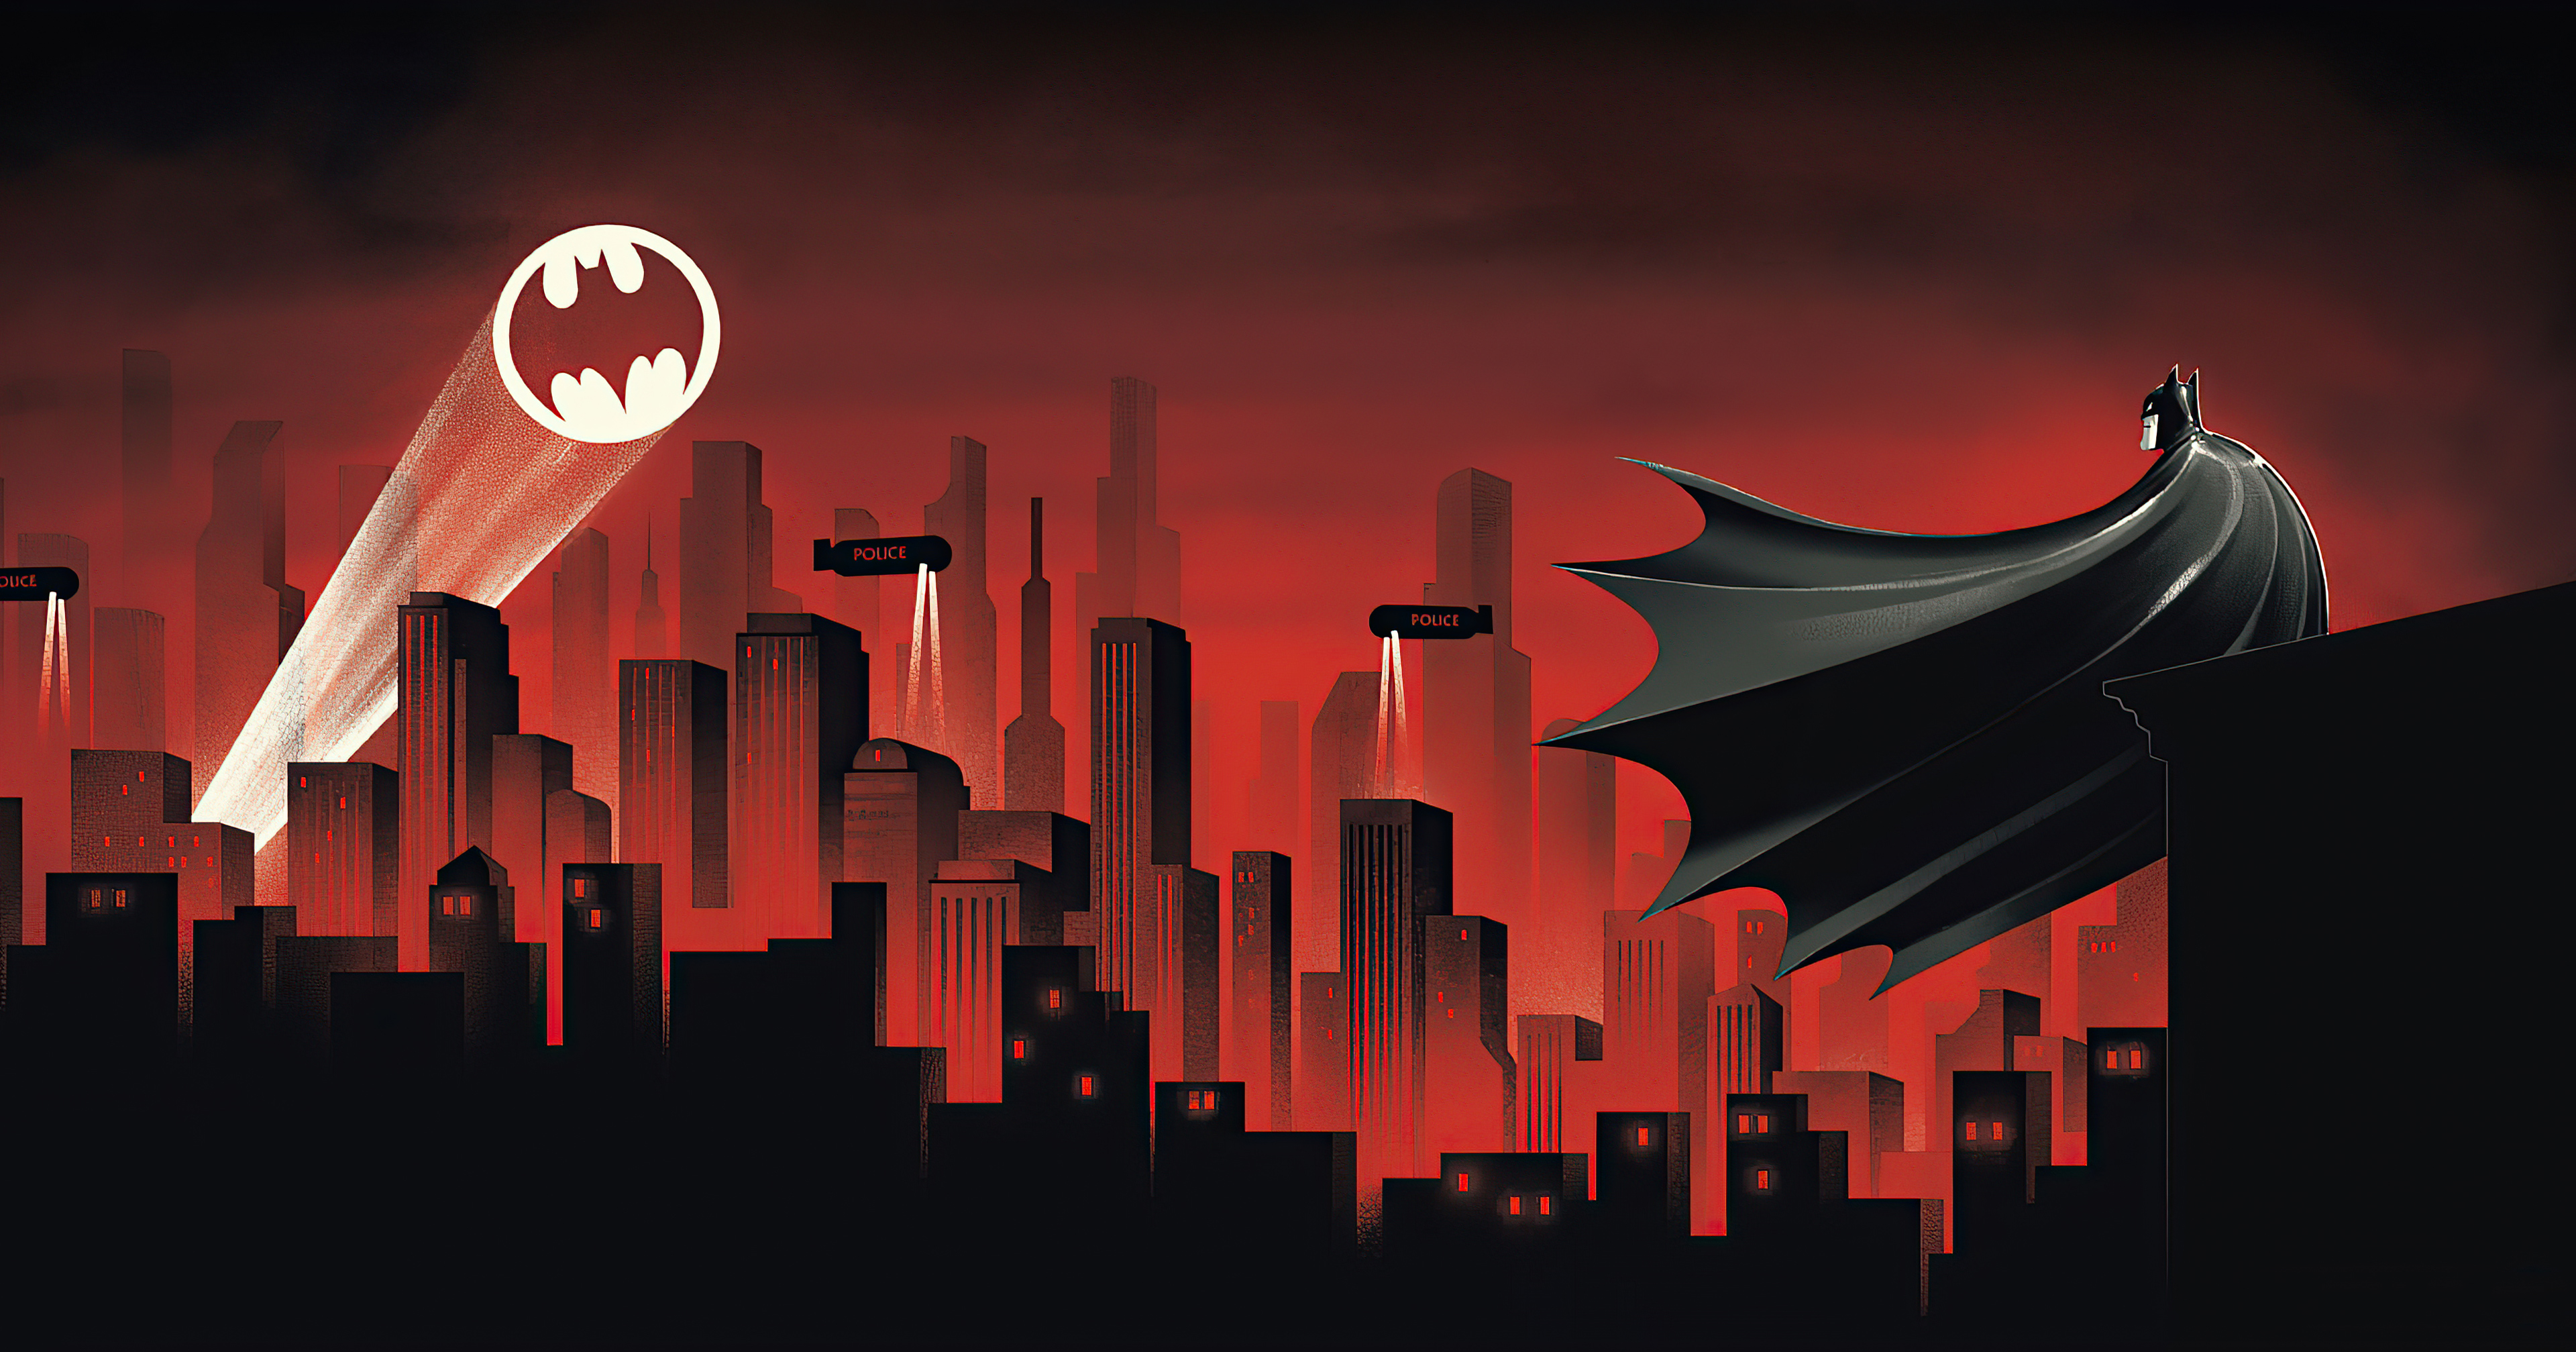 Bat-Signal Batman 4K DC Wallpaper, HD Superheroes 4K Wallpapers, Images,  Photos and Background - Wallpapers Den